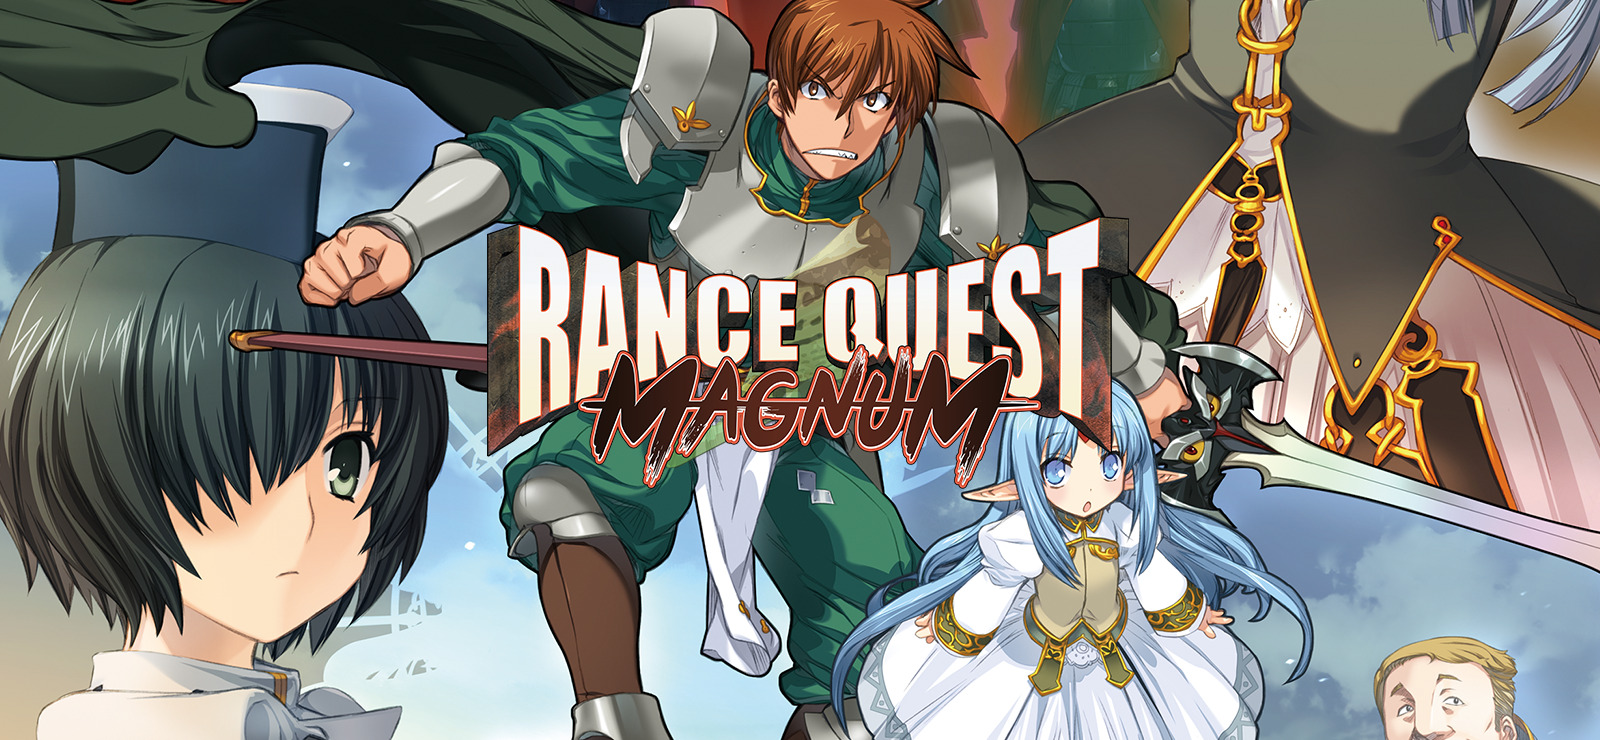 Rance quest download